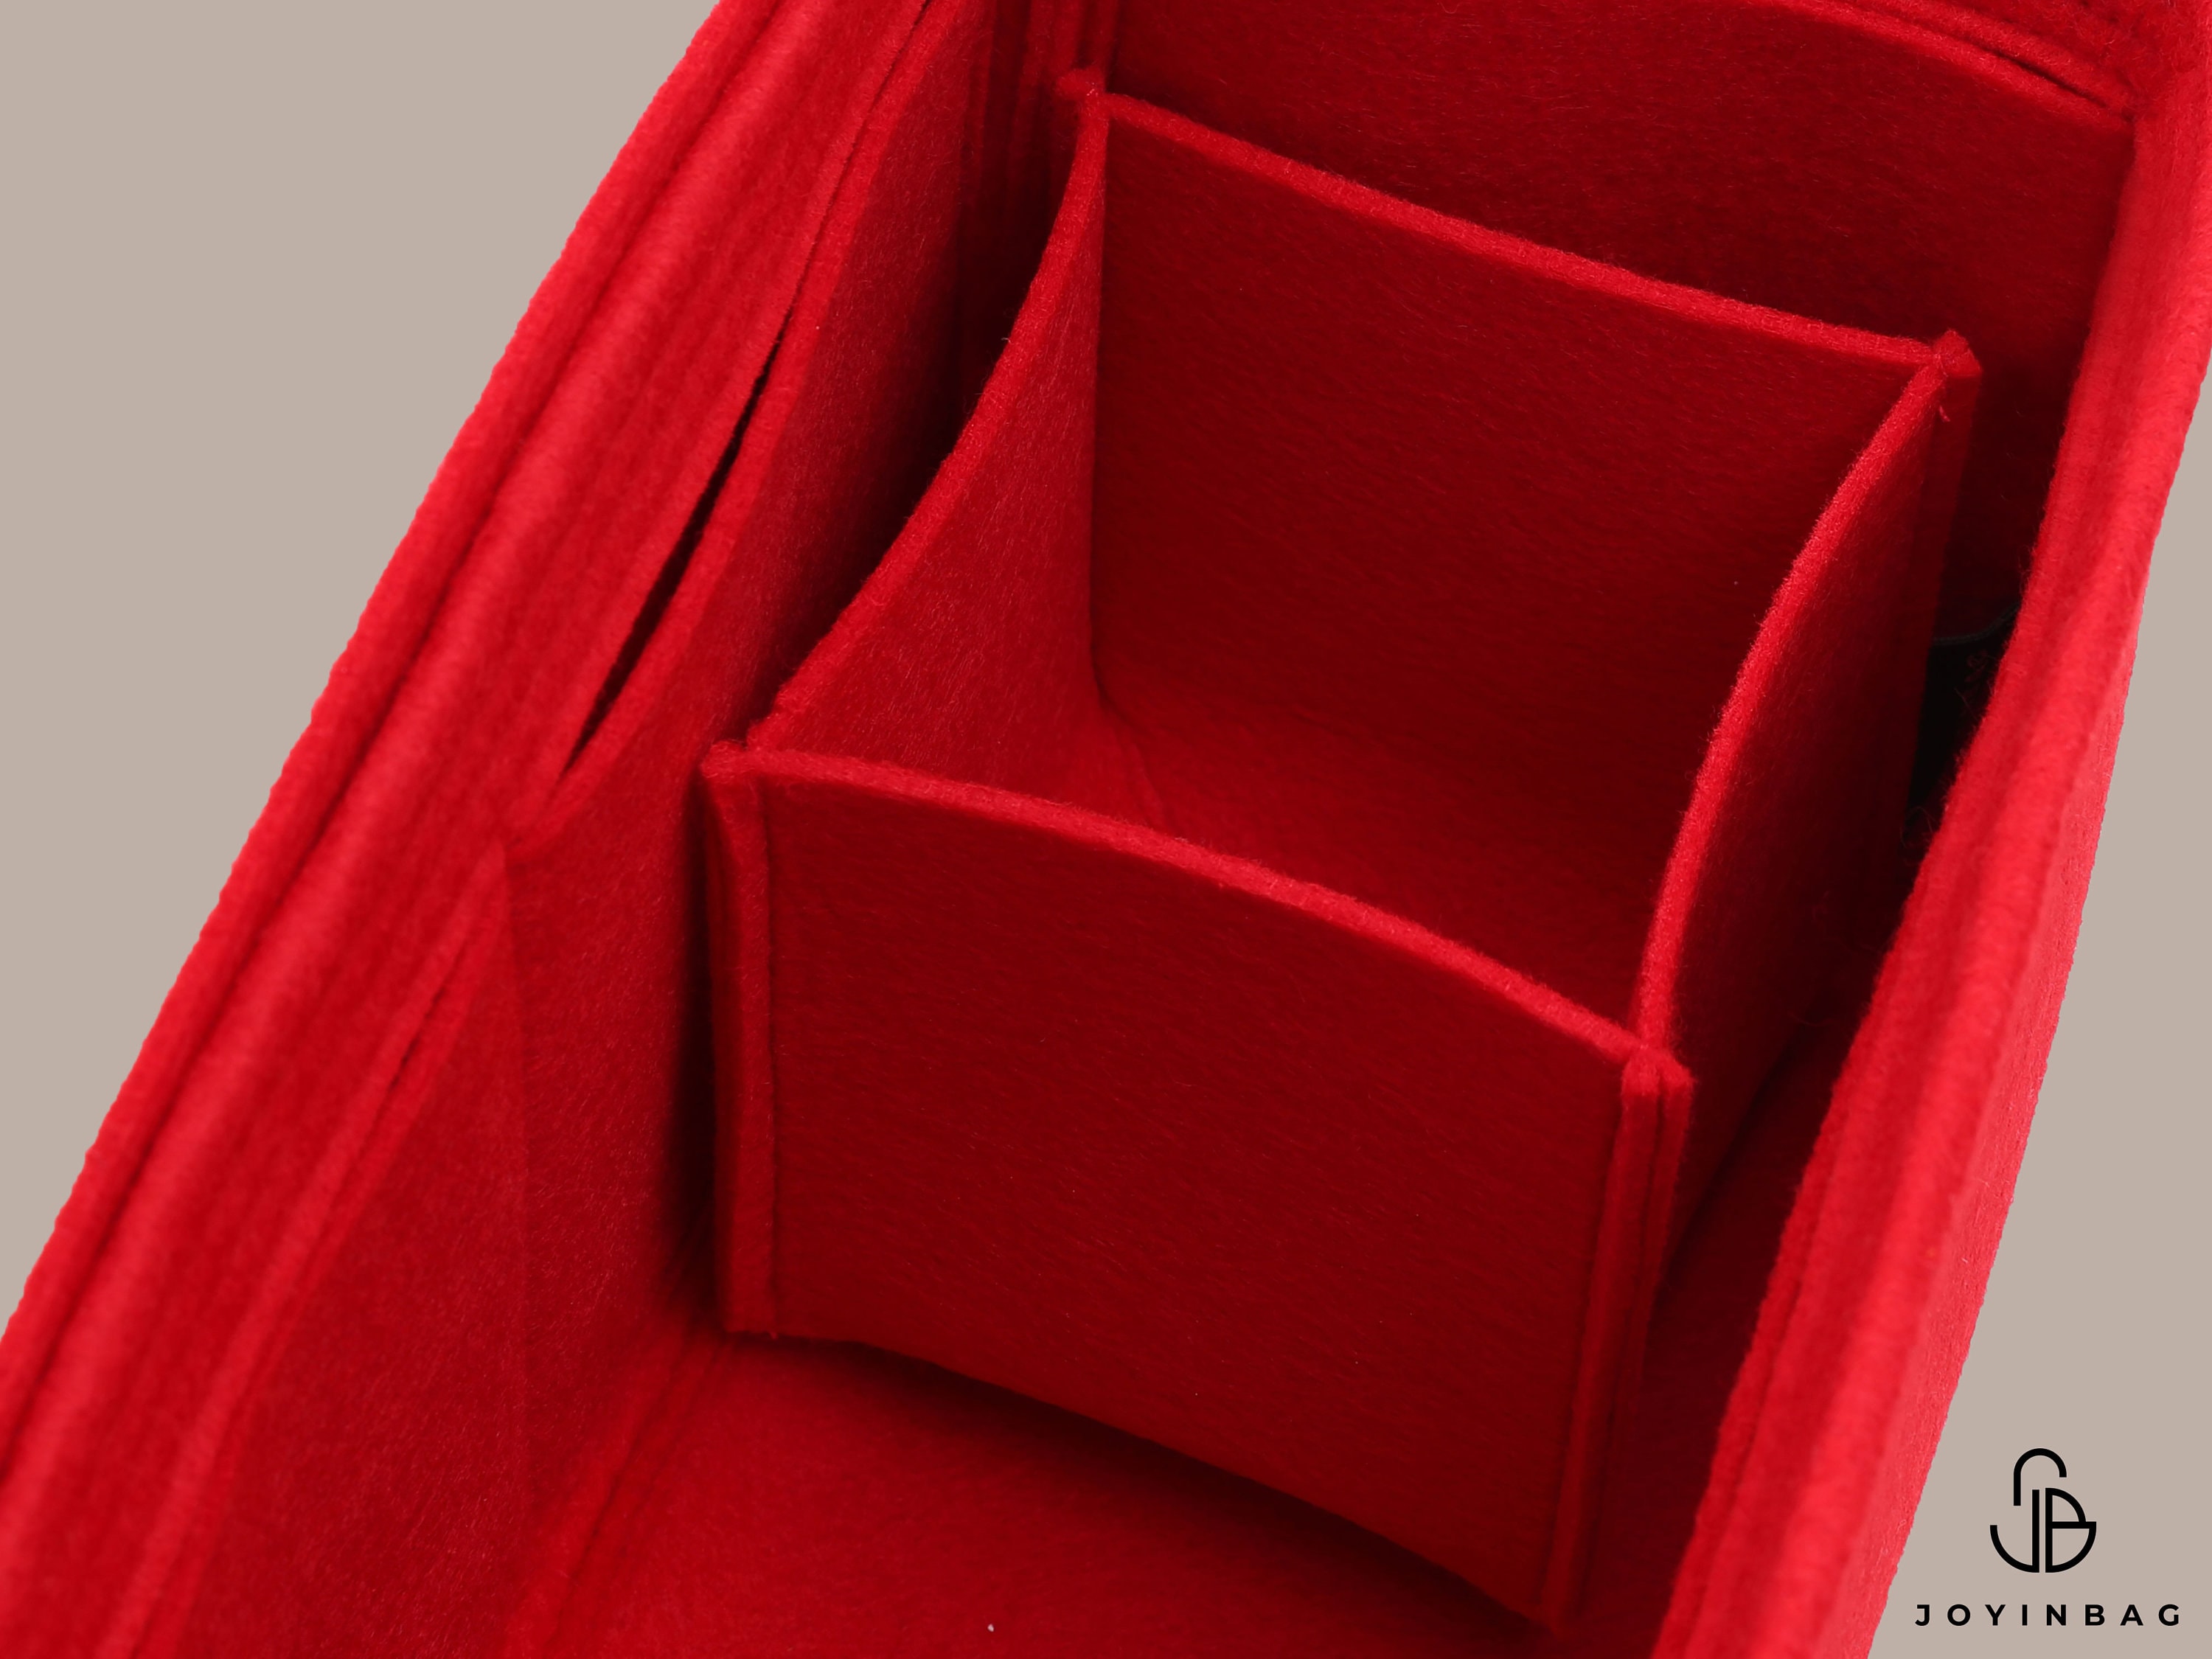 Goyard Tissue box holder. Special order custom design